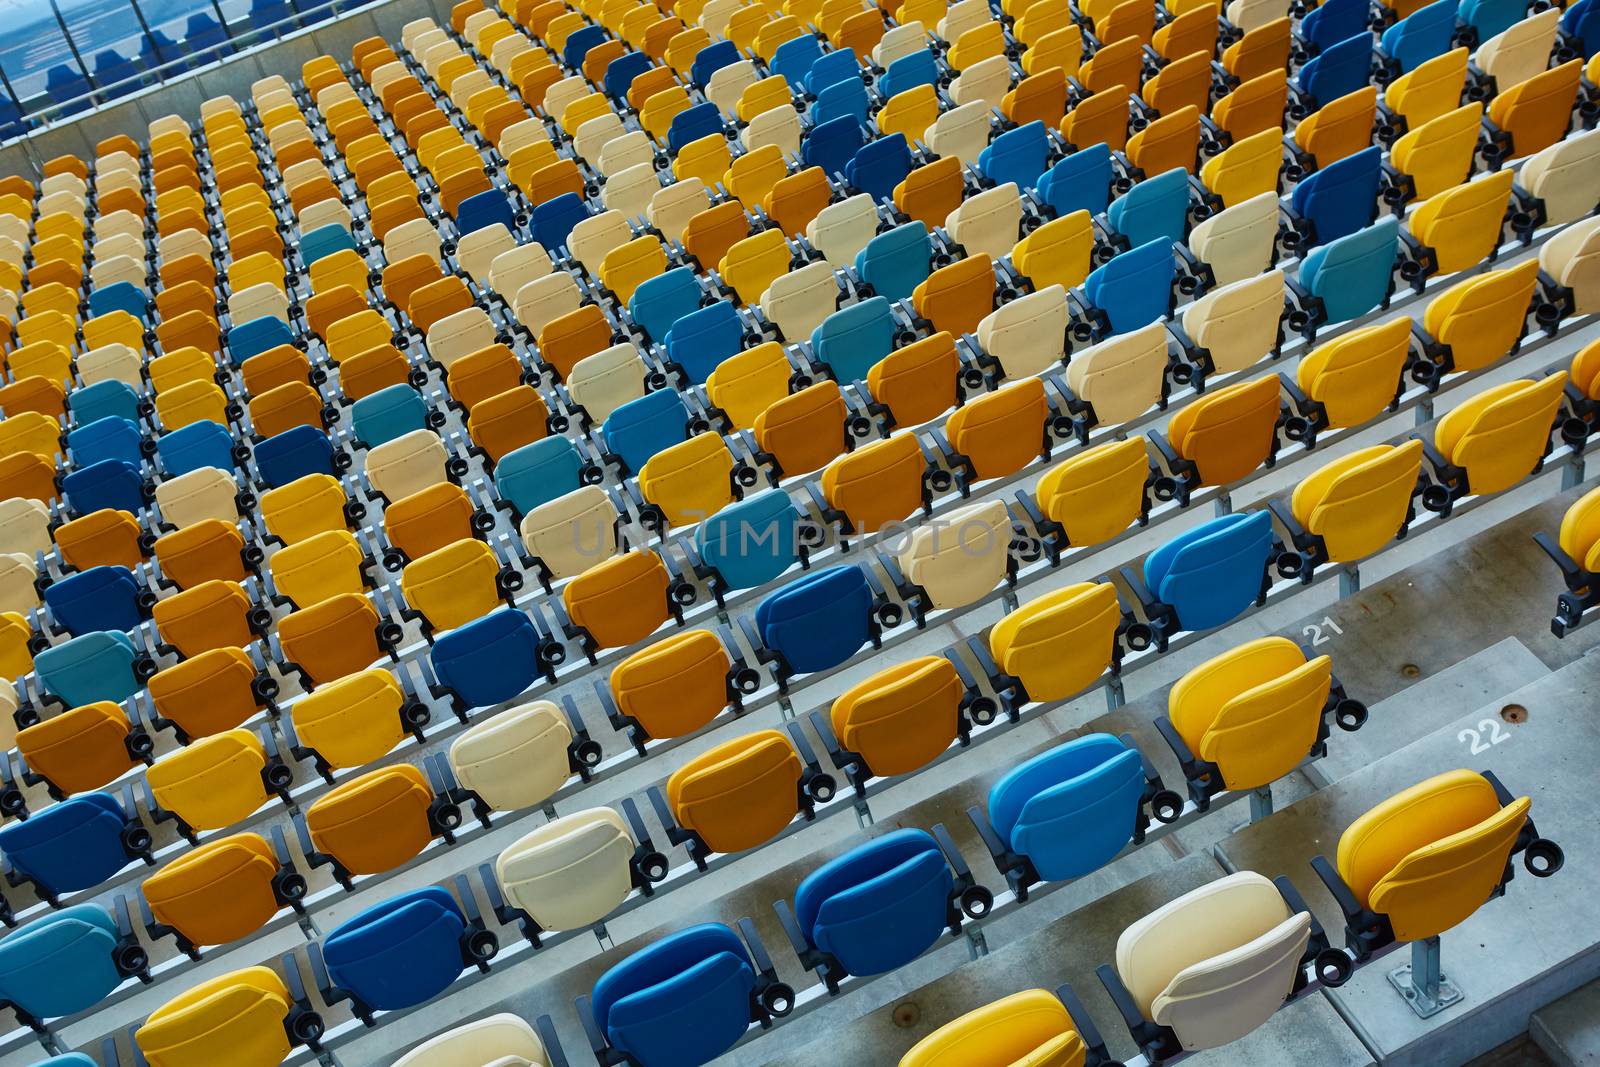 The blue anf yellow empty chair on sport stadium